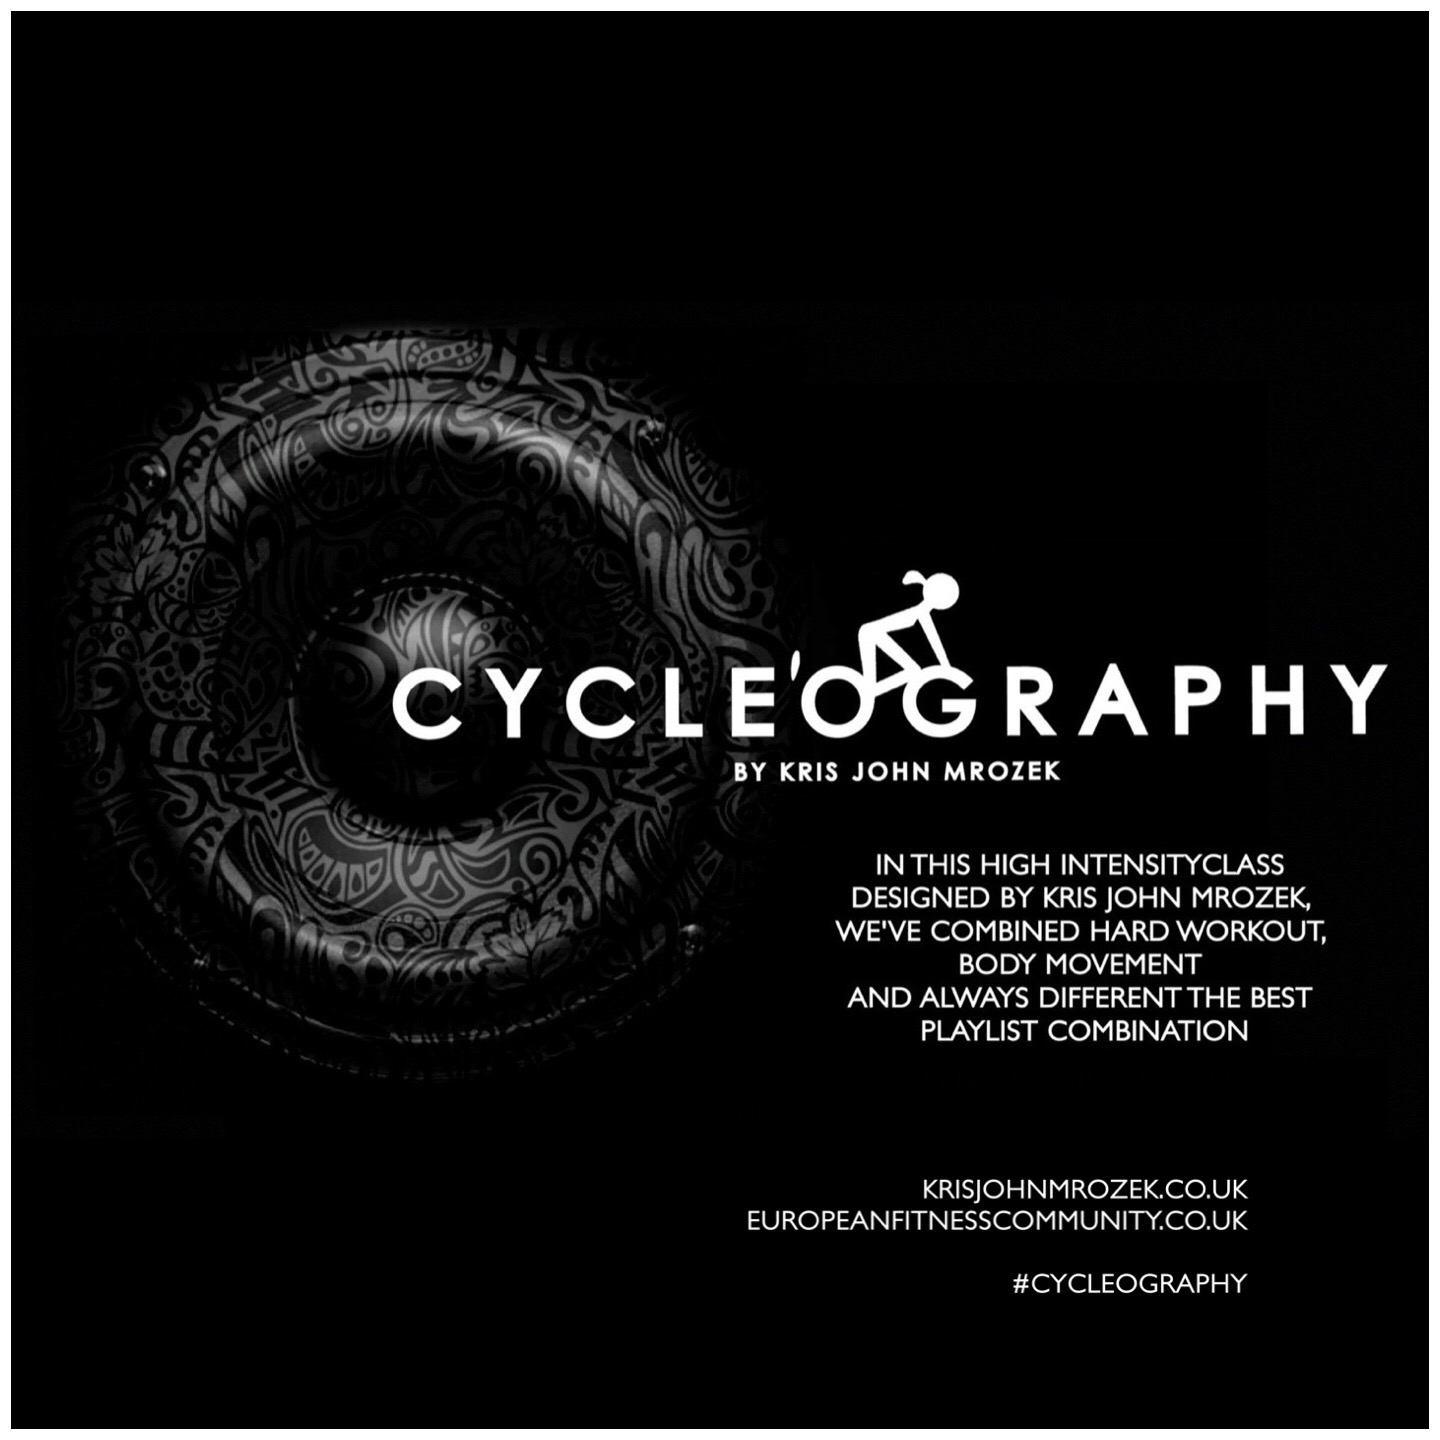 CYCLE'OGRAPHY - SIGNATURE CLASS by KRIS JOHN MROZEK